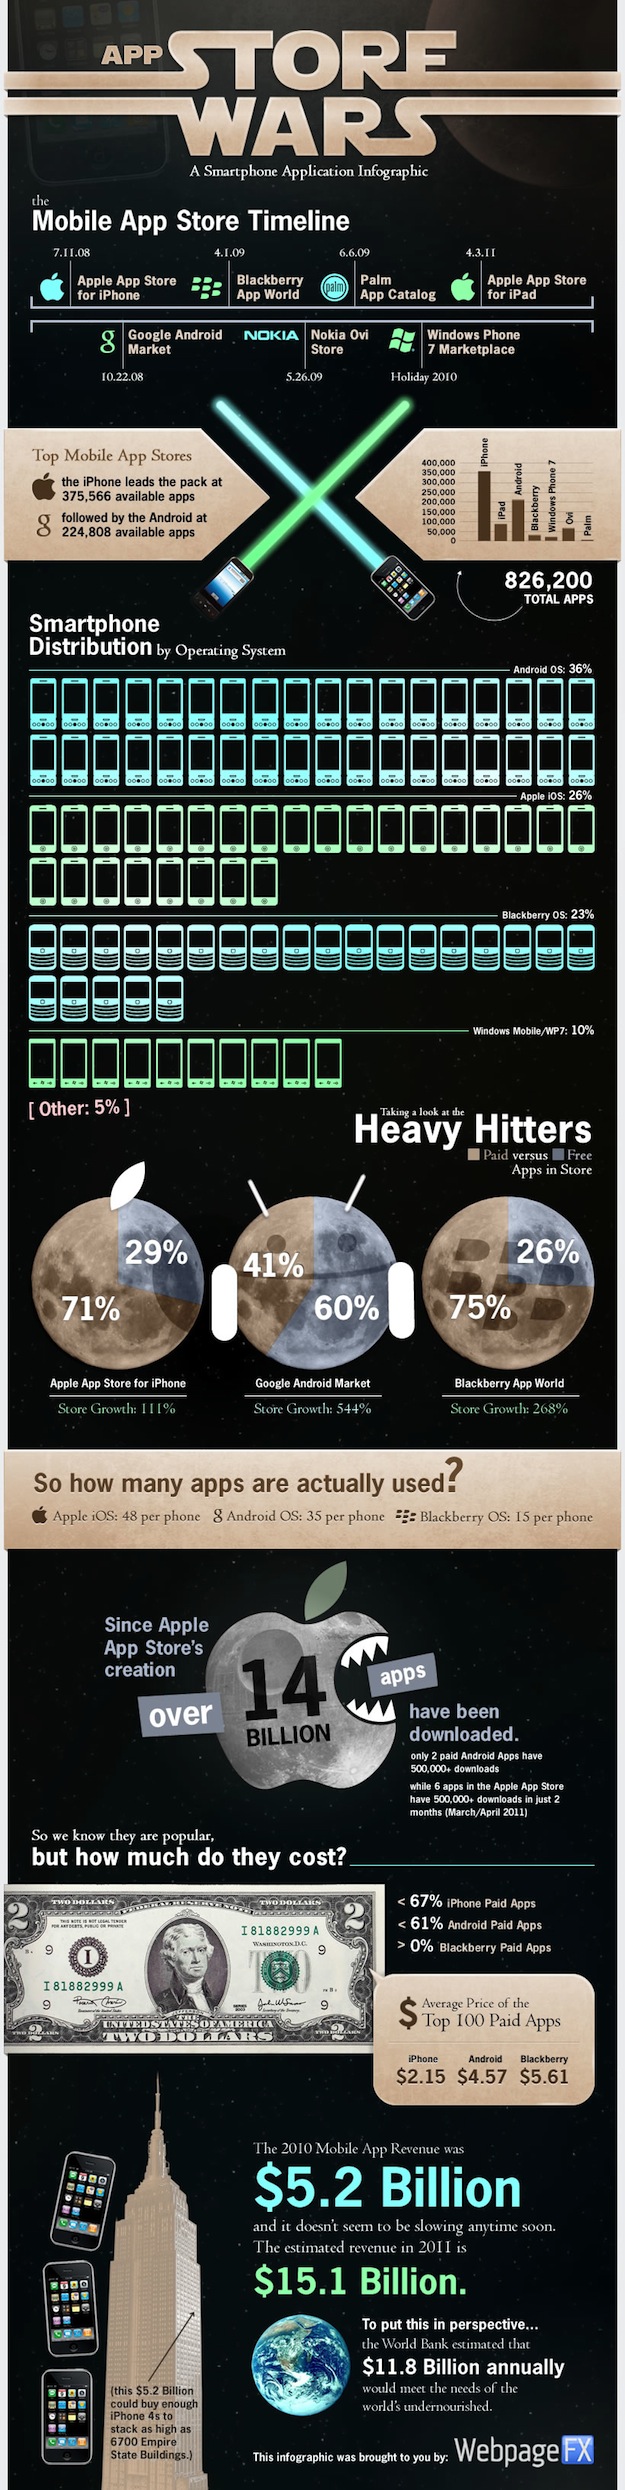 App Store Wars